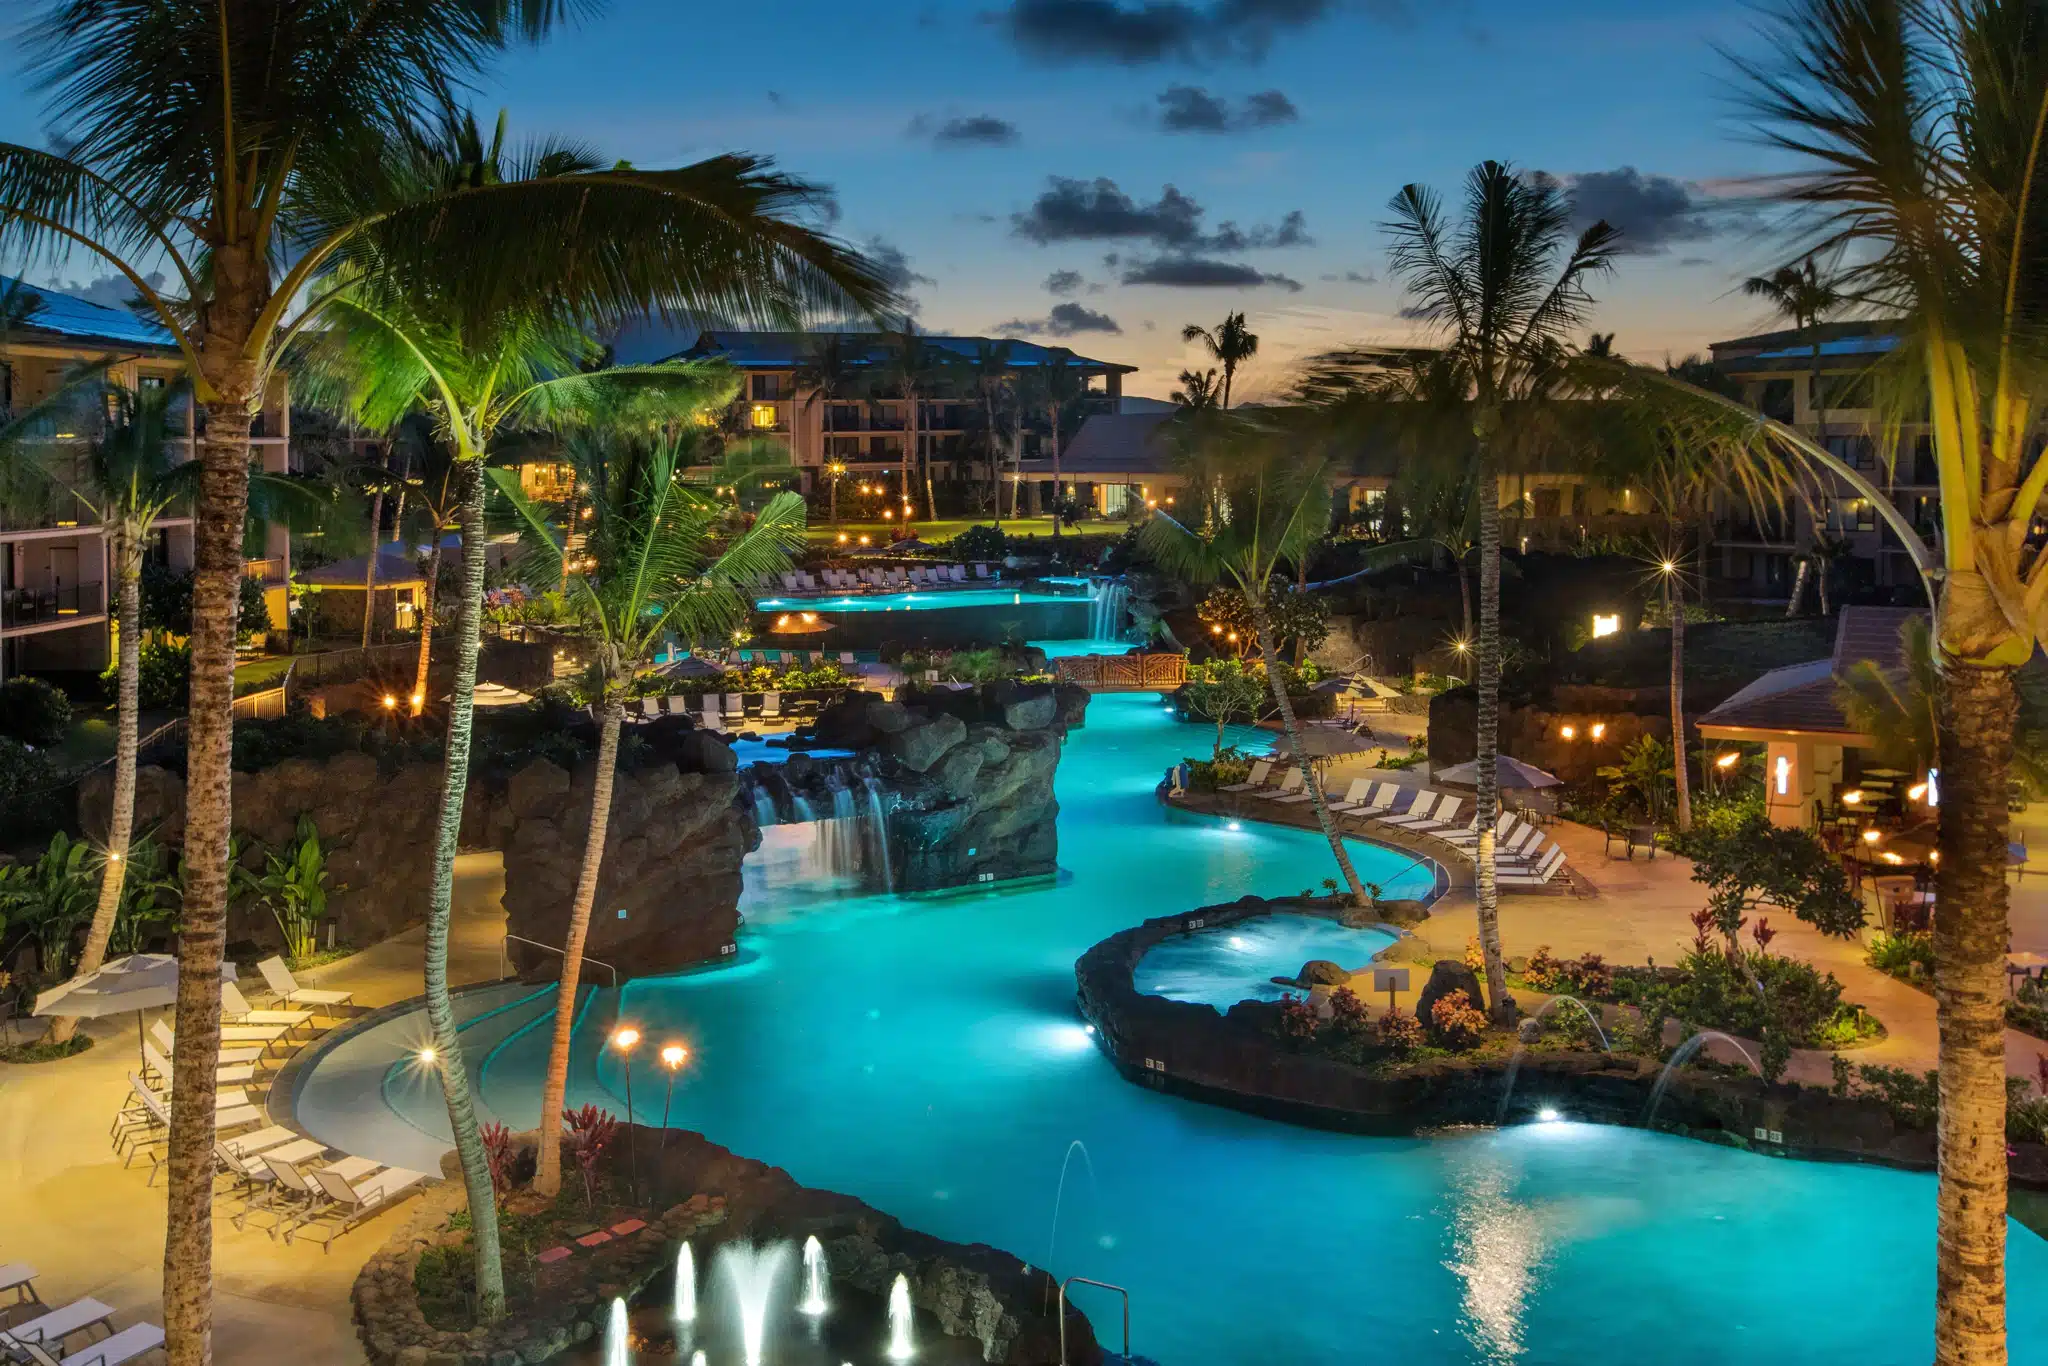 Koloa Landing Resort is a Hotel located in the city of Poipu on Kauai, Hawaii